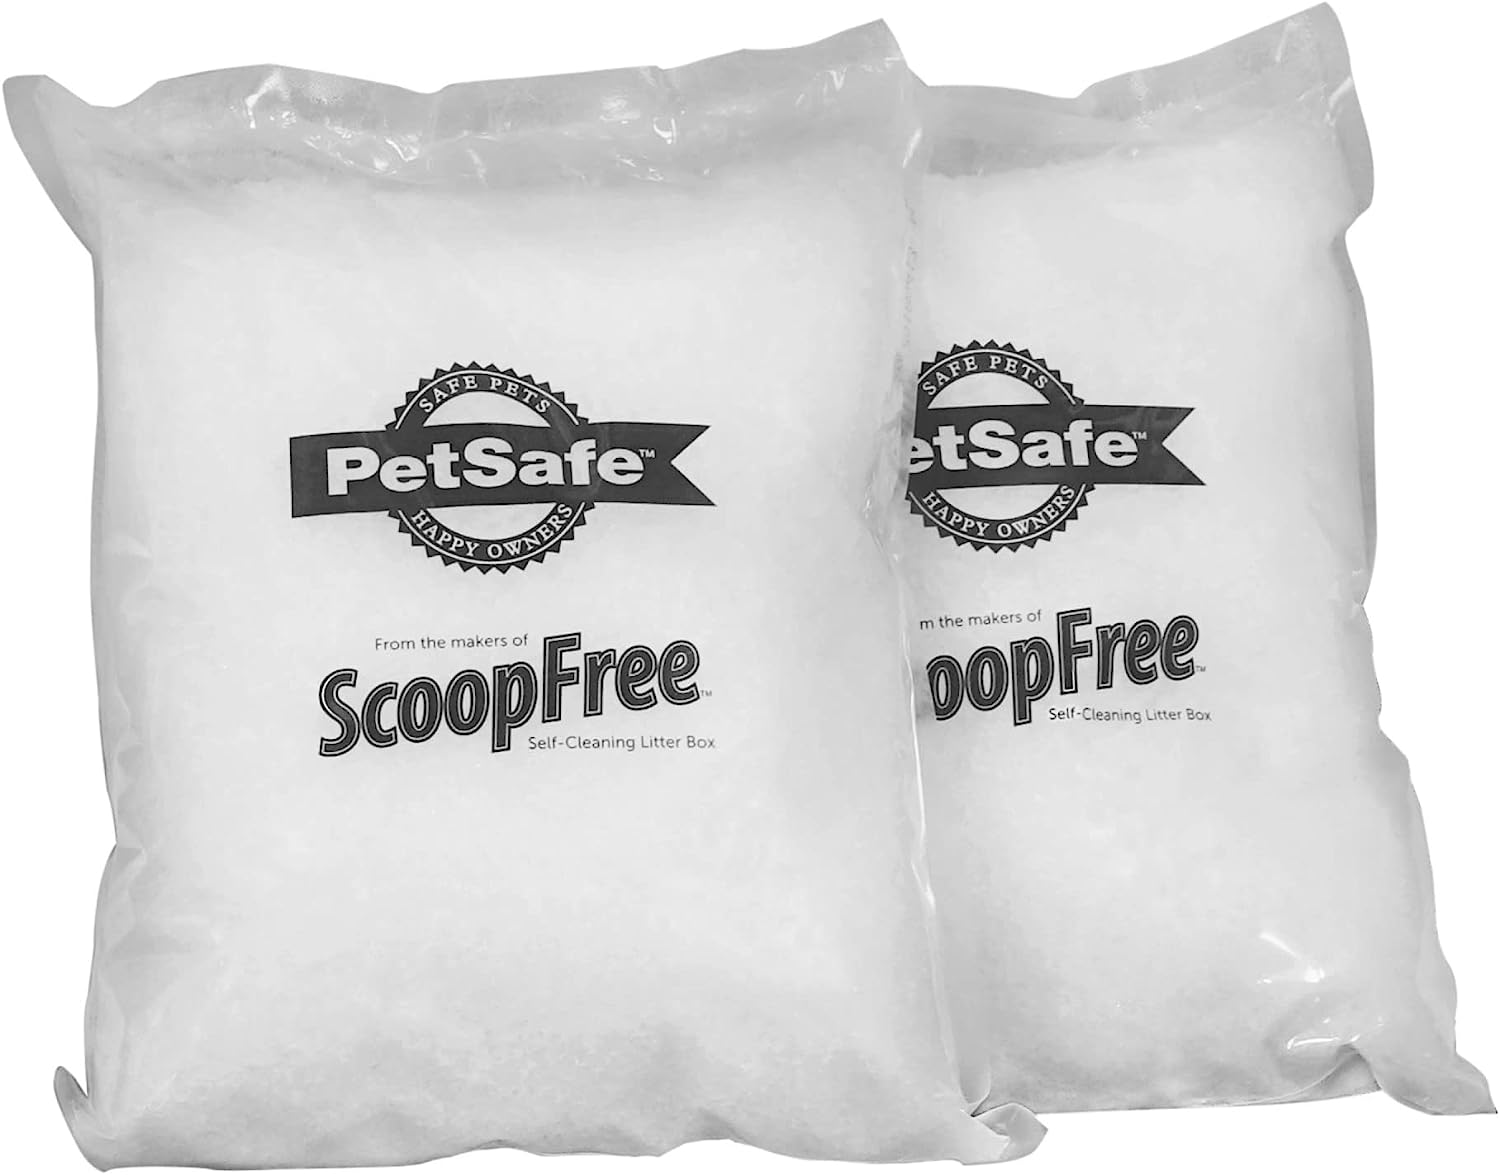 3. PetSafe ScoopFree Premium Crystal Cat Litter